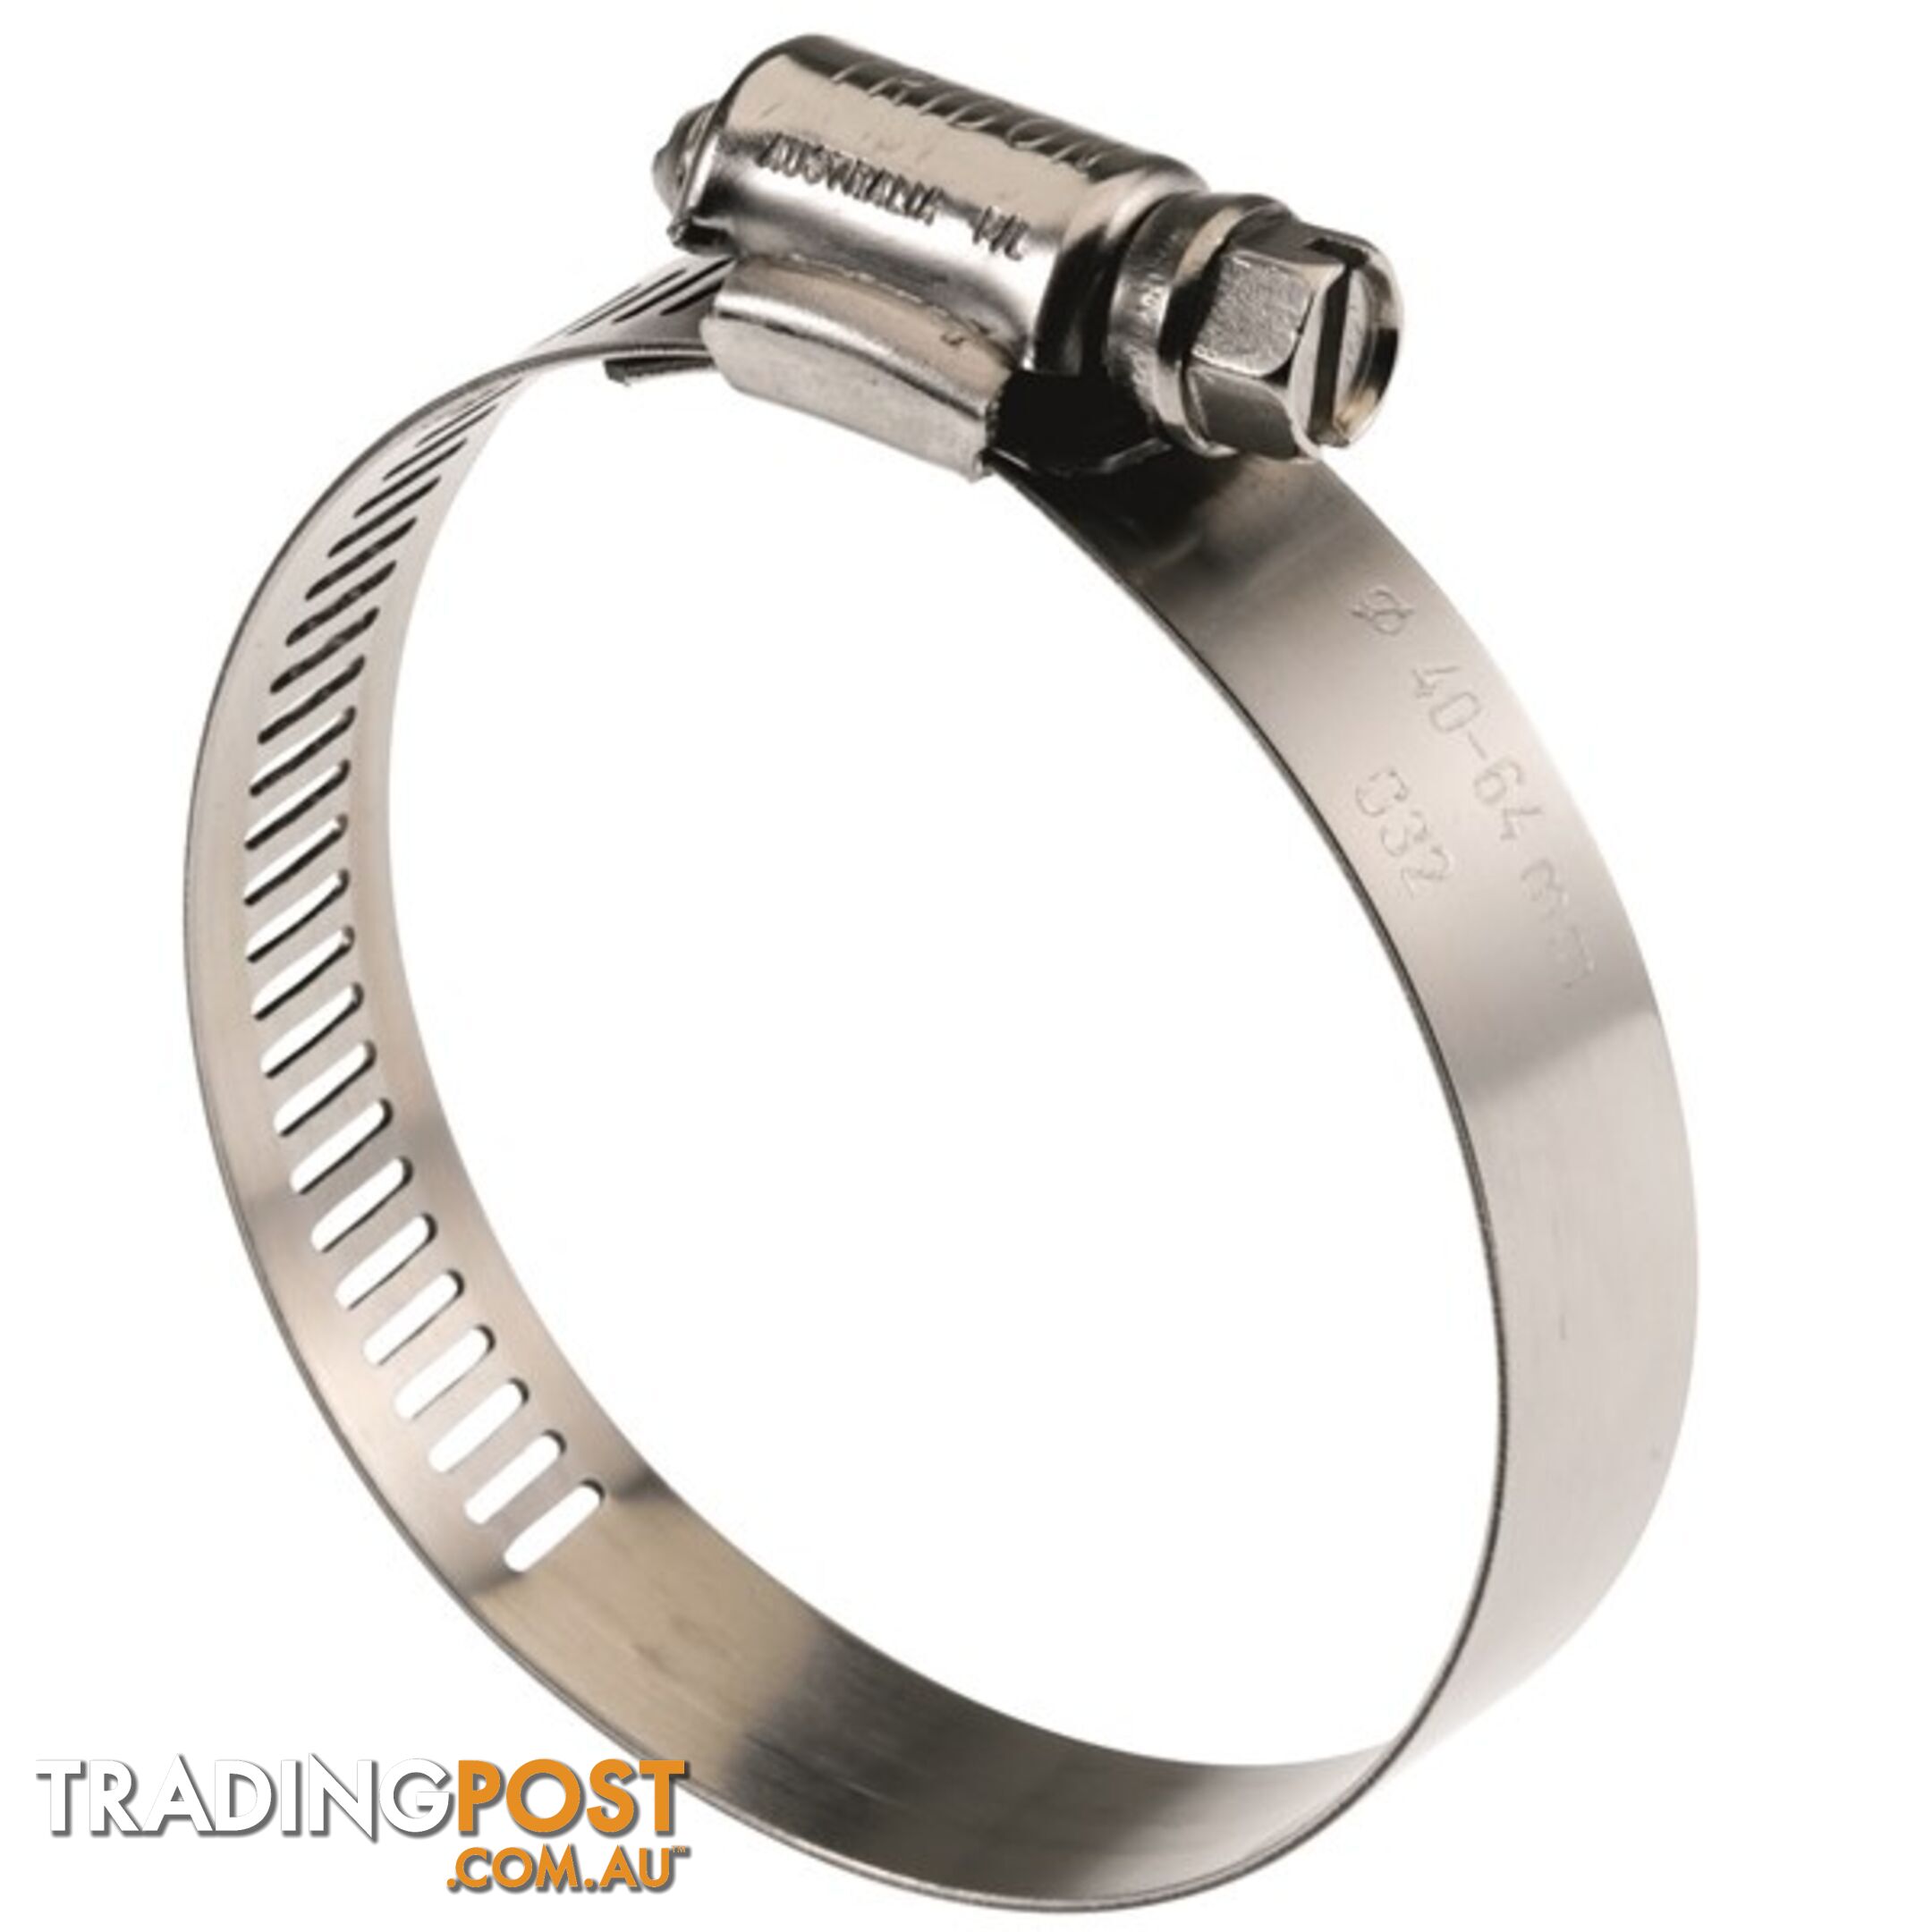 Tridon Full S. Steel Hose Clamps13mm â 25mm Perforated Band 10pk SKU - HAS008P